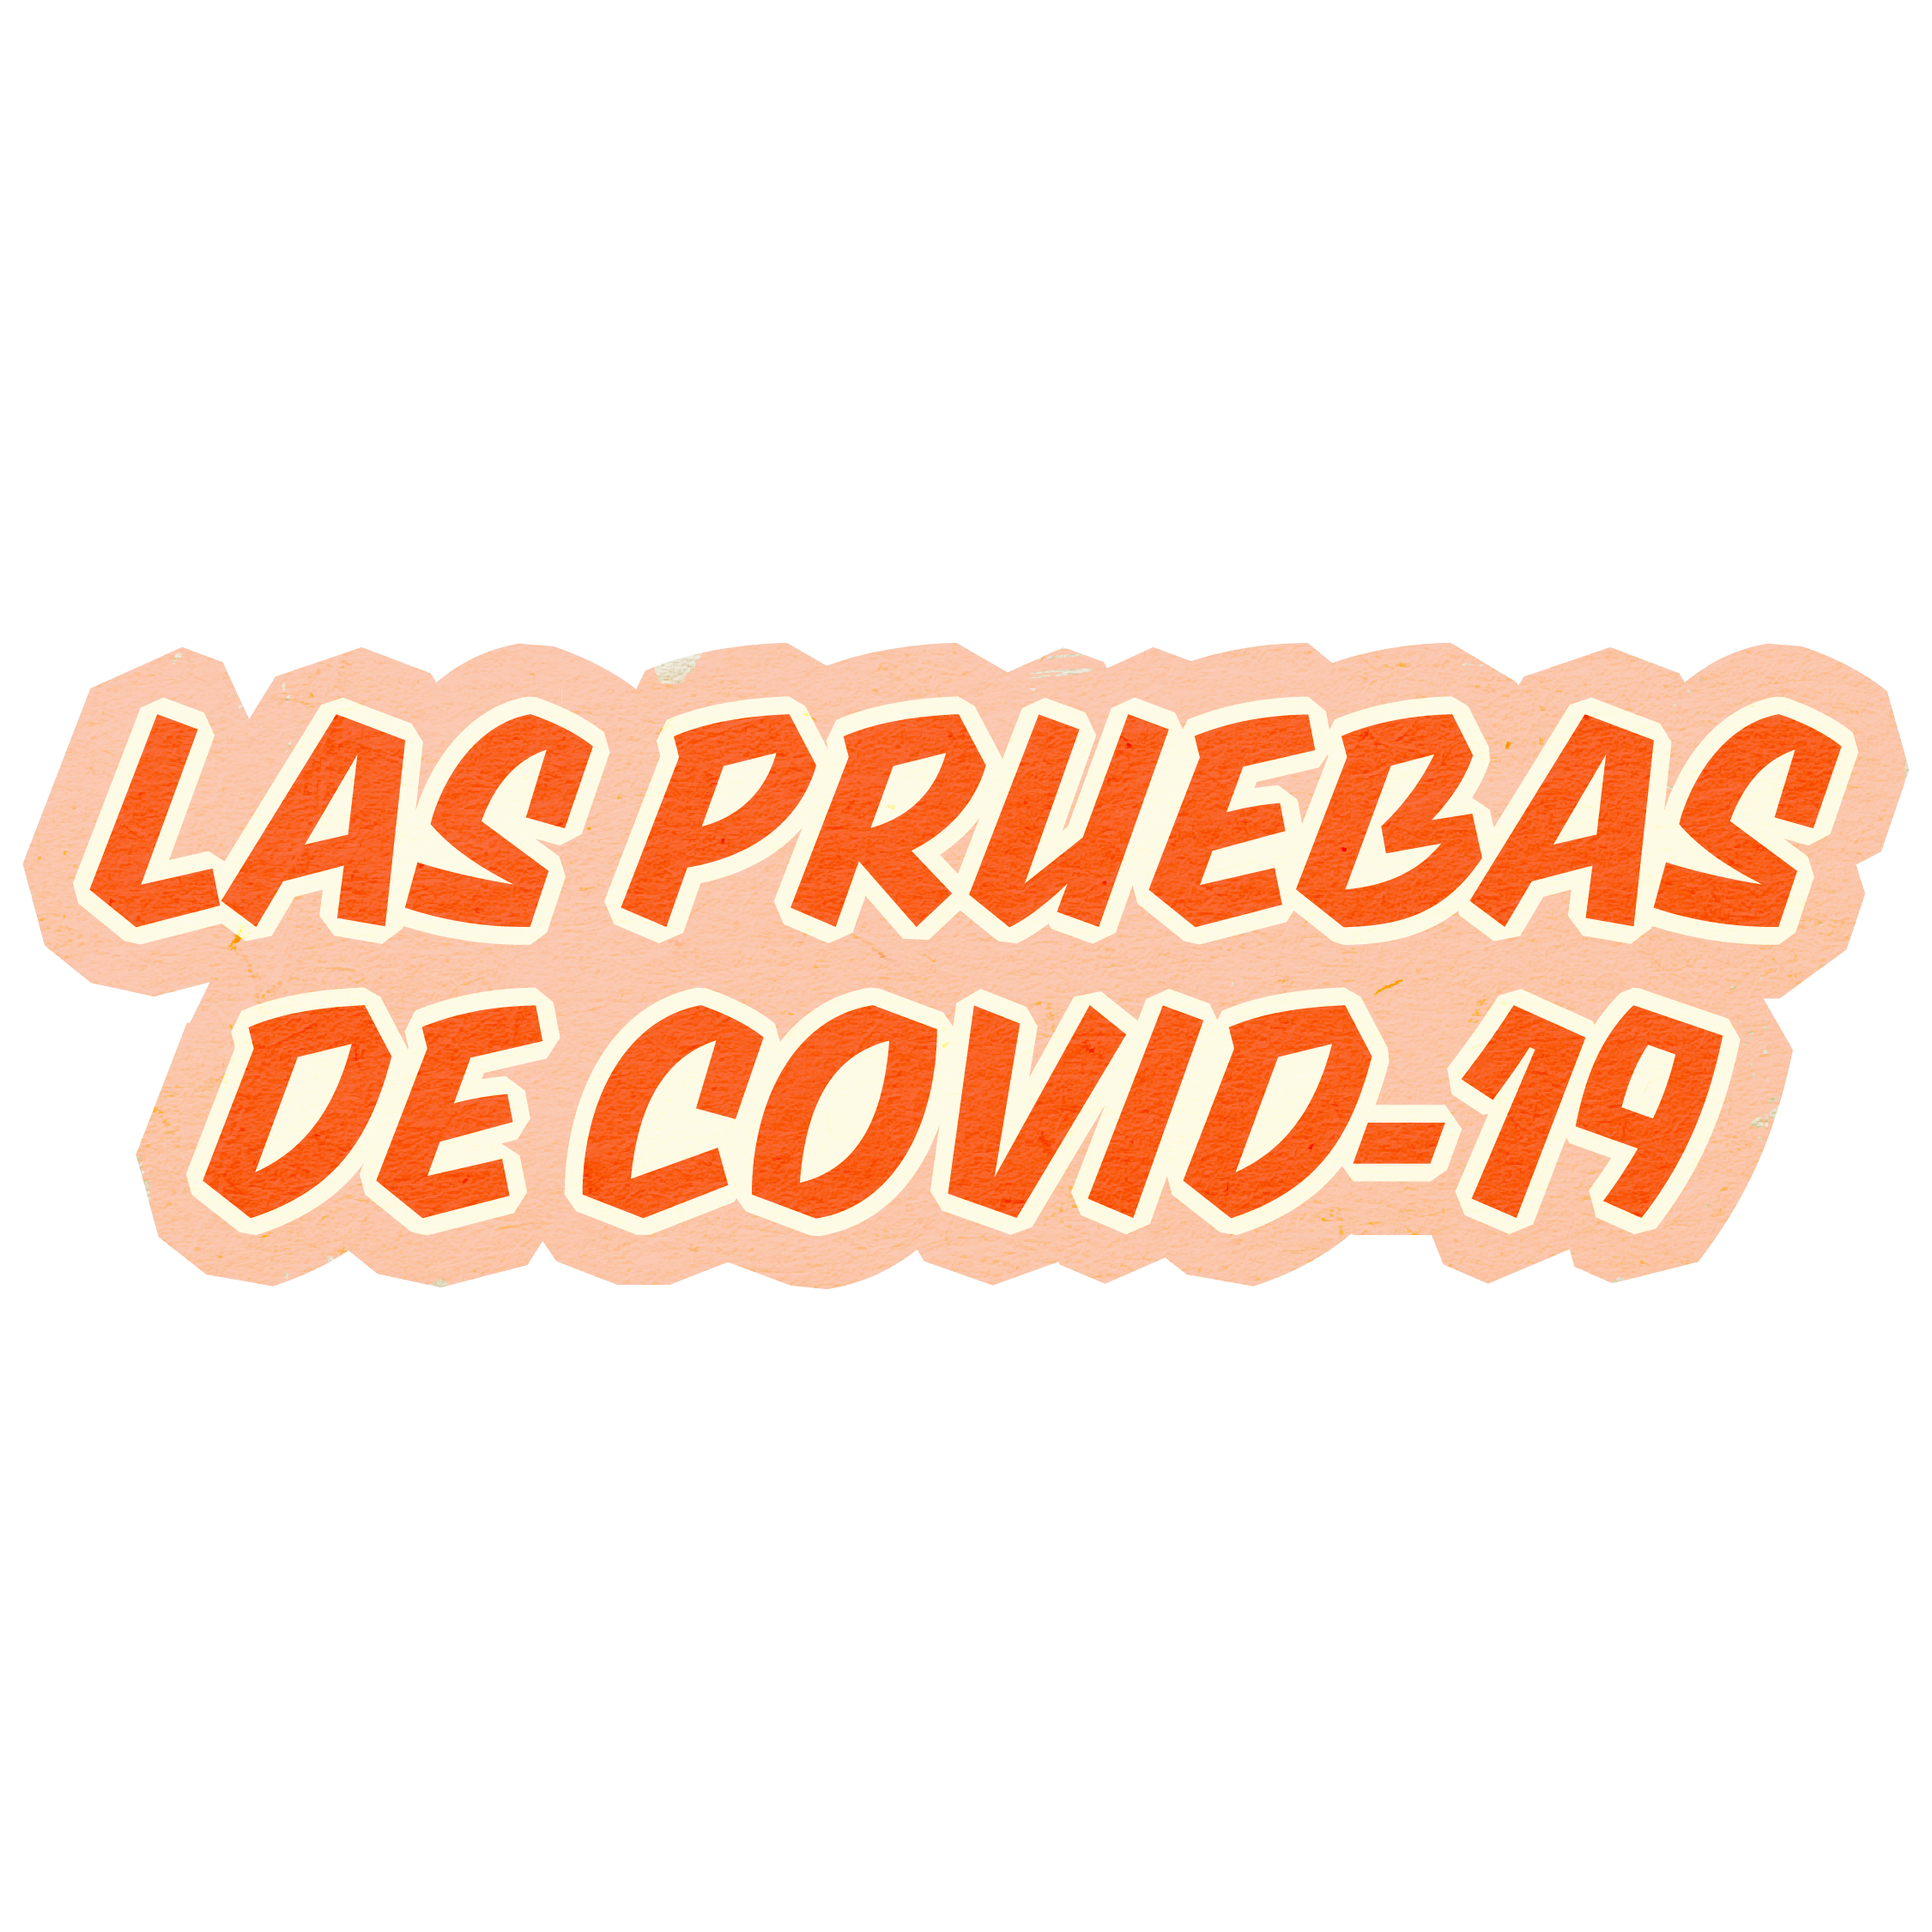 Illustrated lettering of the term "Las pruebas de COVID-19"